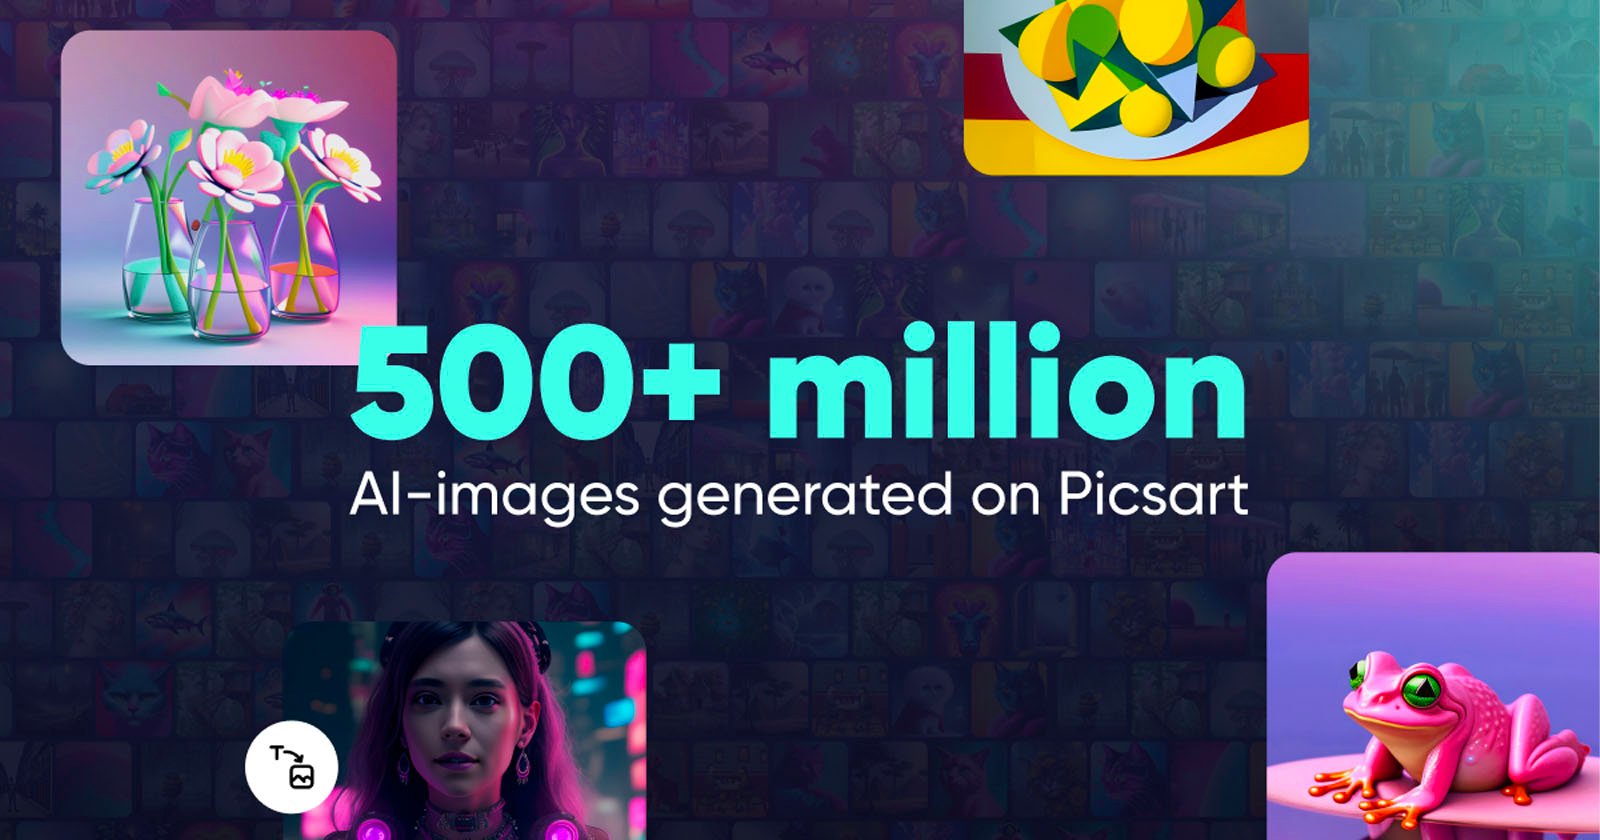 Picsarts Generative AI Has Made Half a Billion Images and 2 Million Per Day